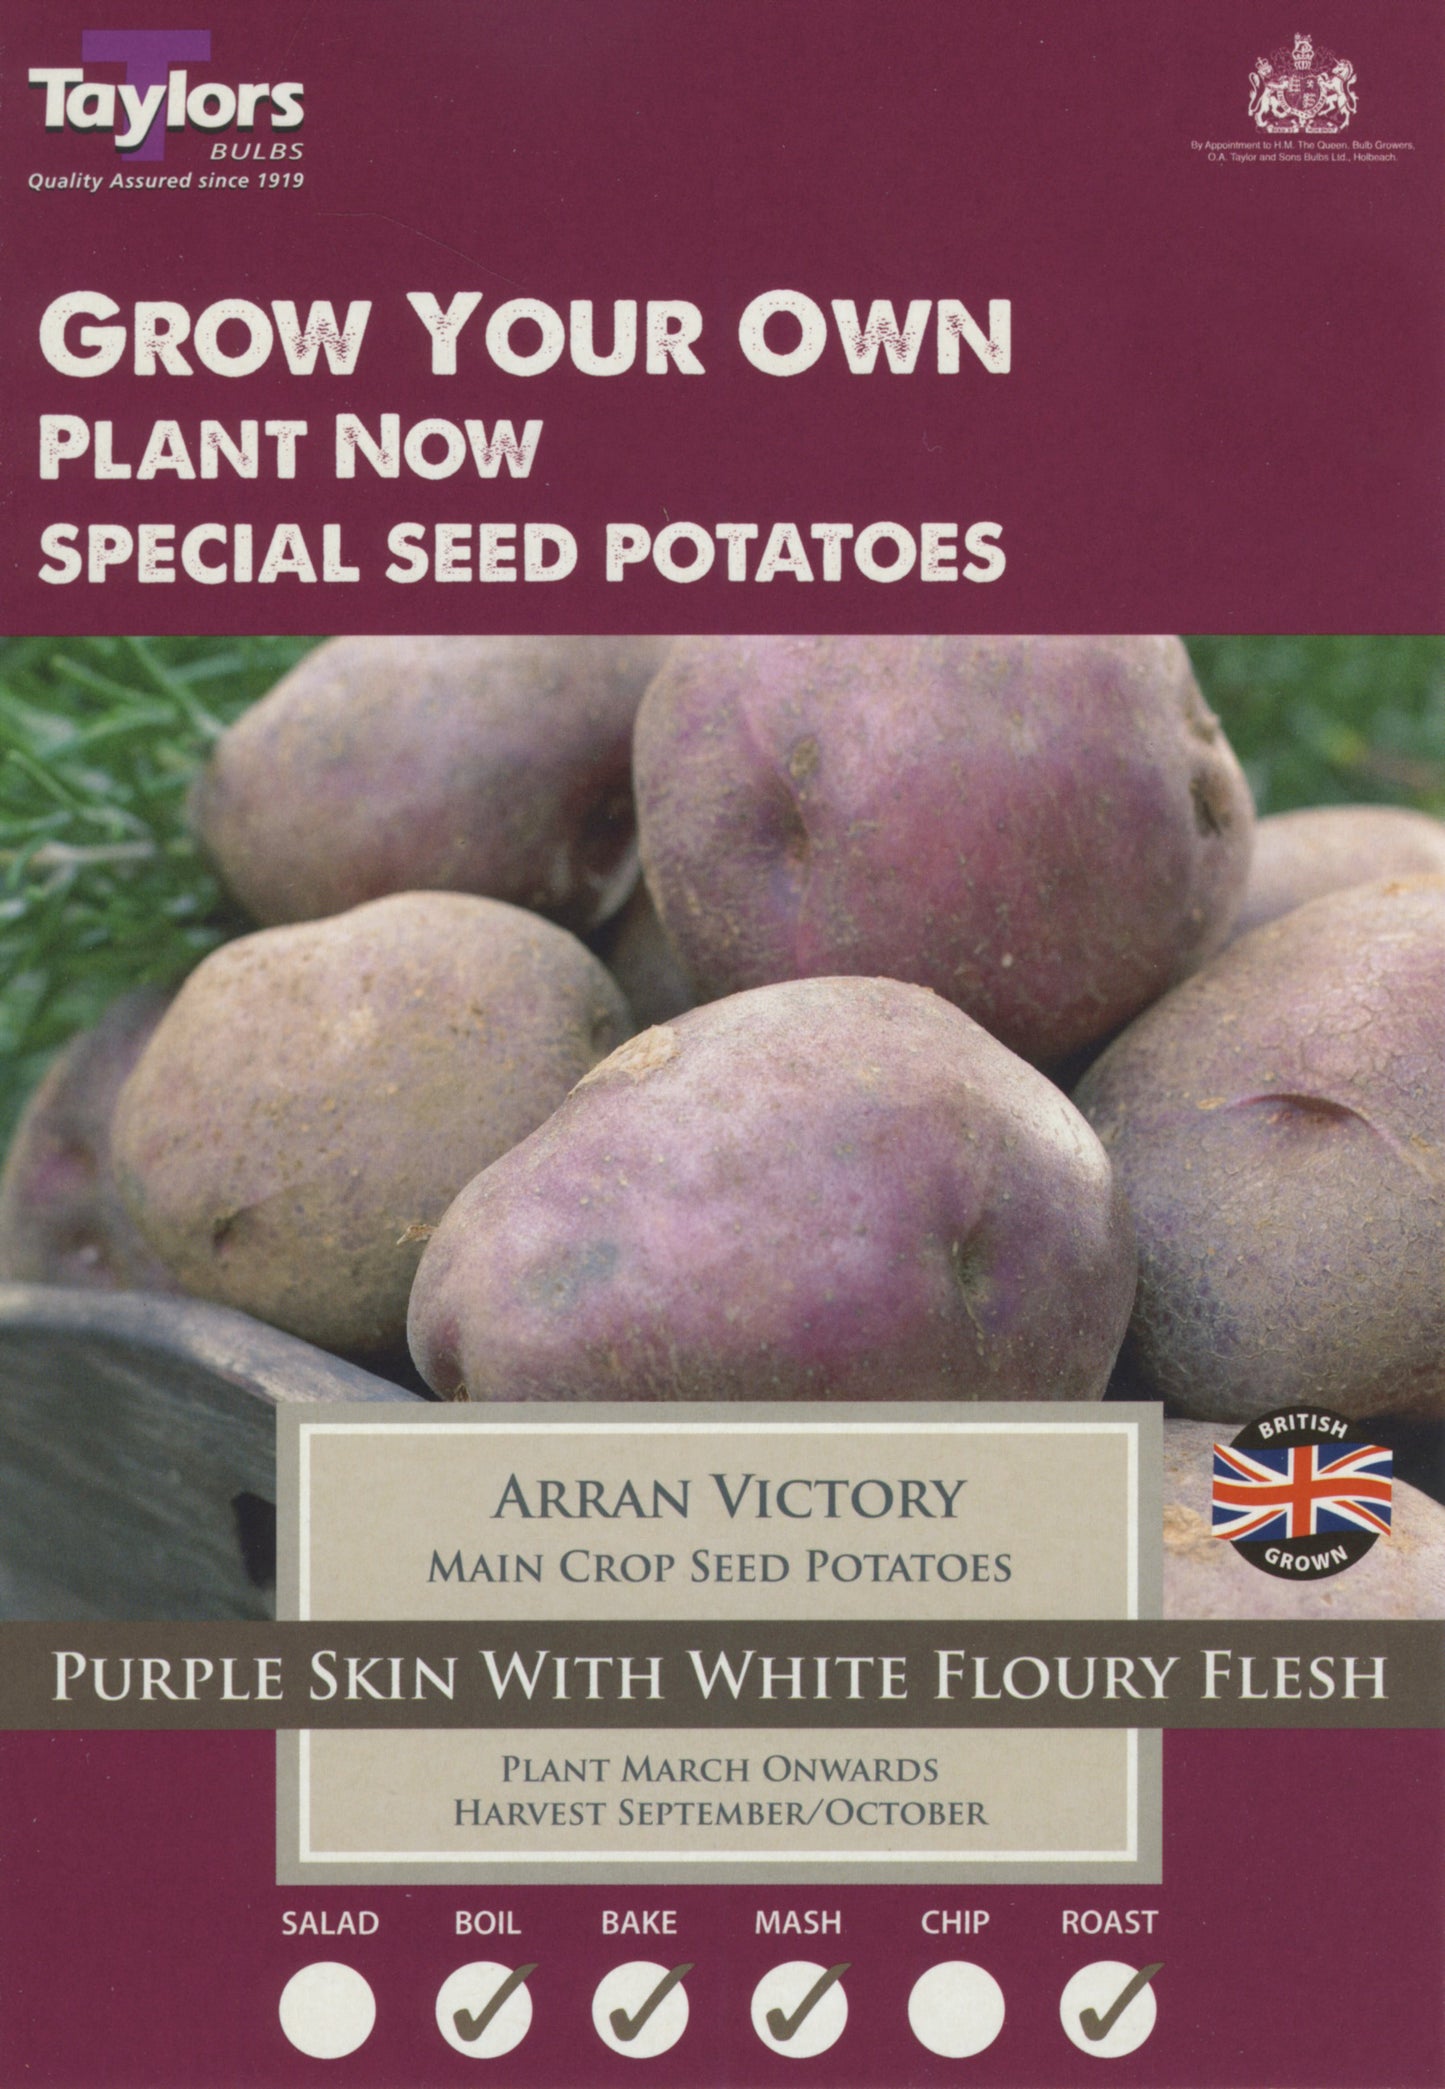 Taylors - Seed Potatoes - Arran Victory - 10 Tubers - Main Crop